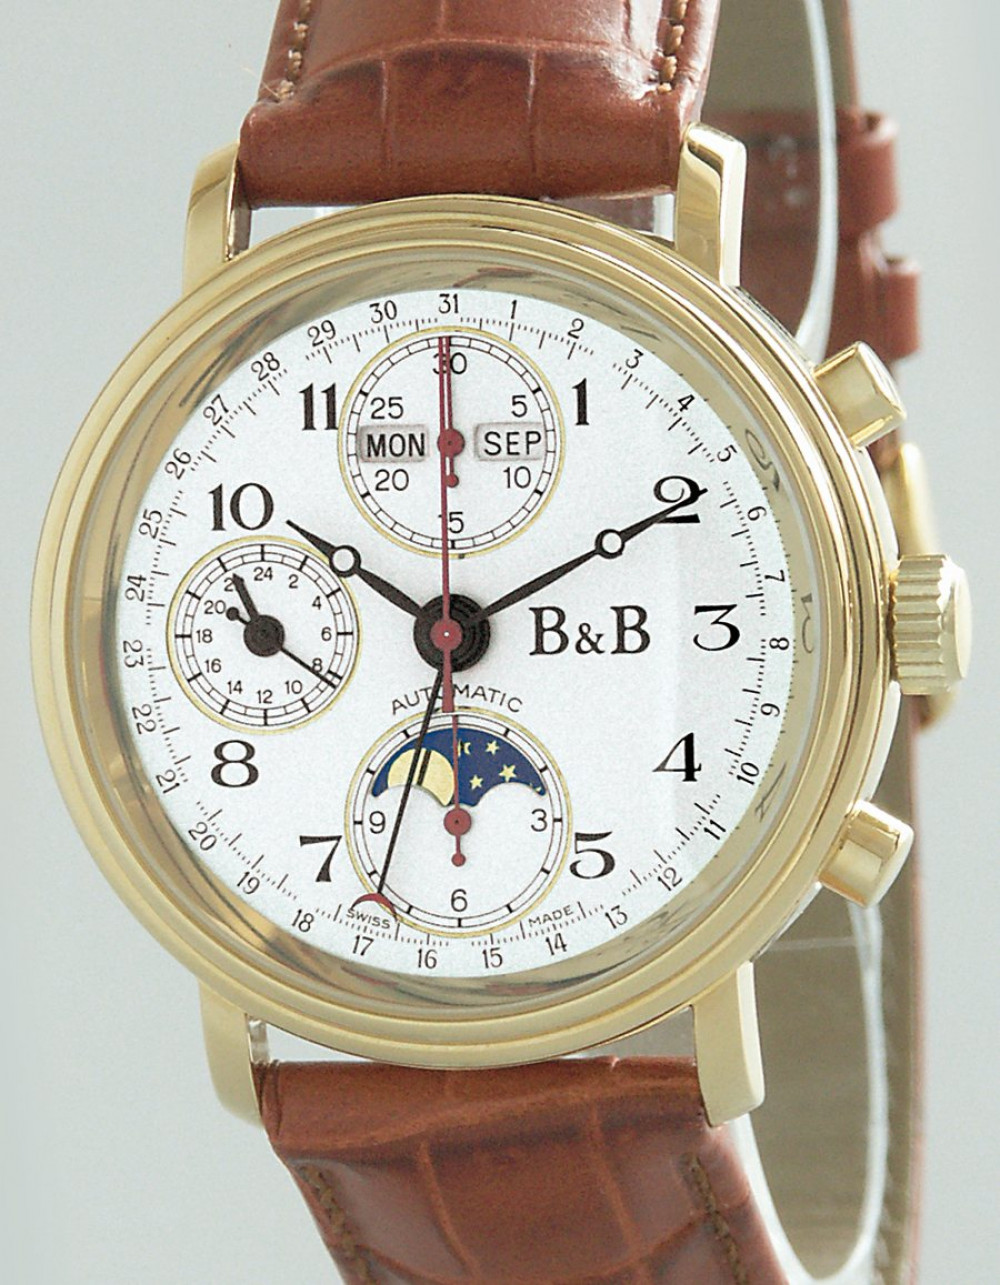 Zegarek firmy B & B, model Galilei-2